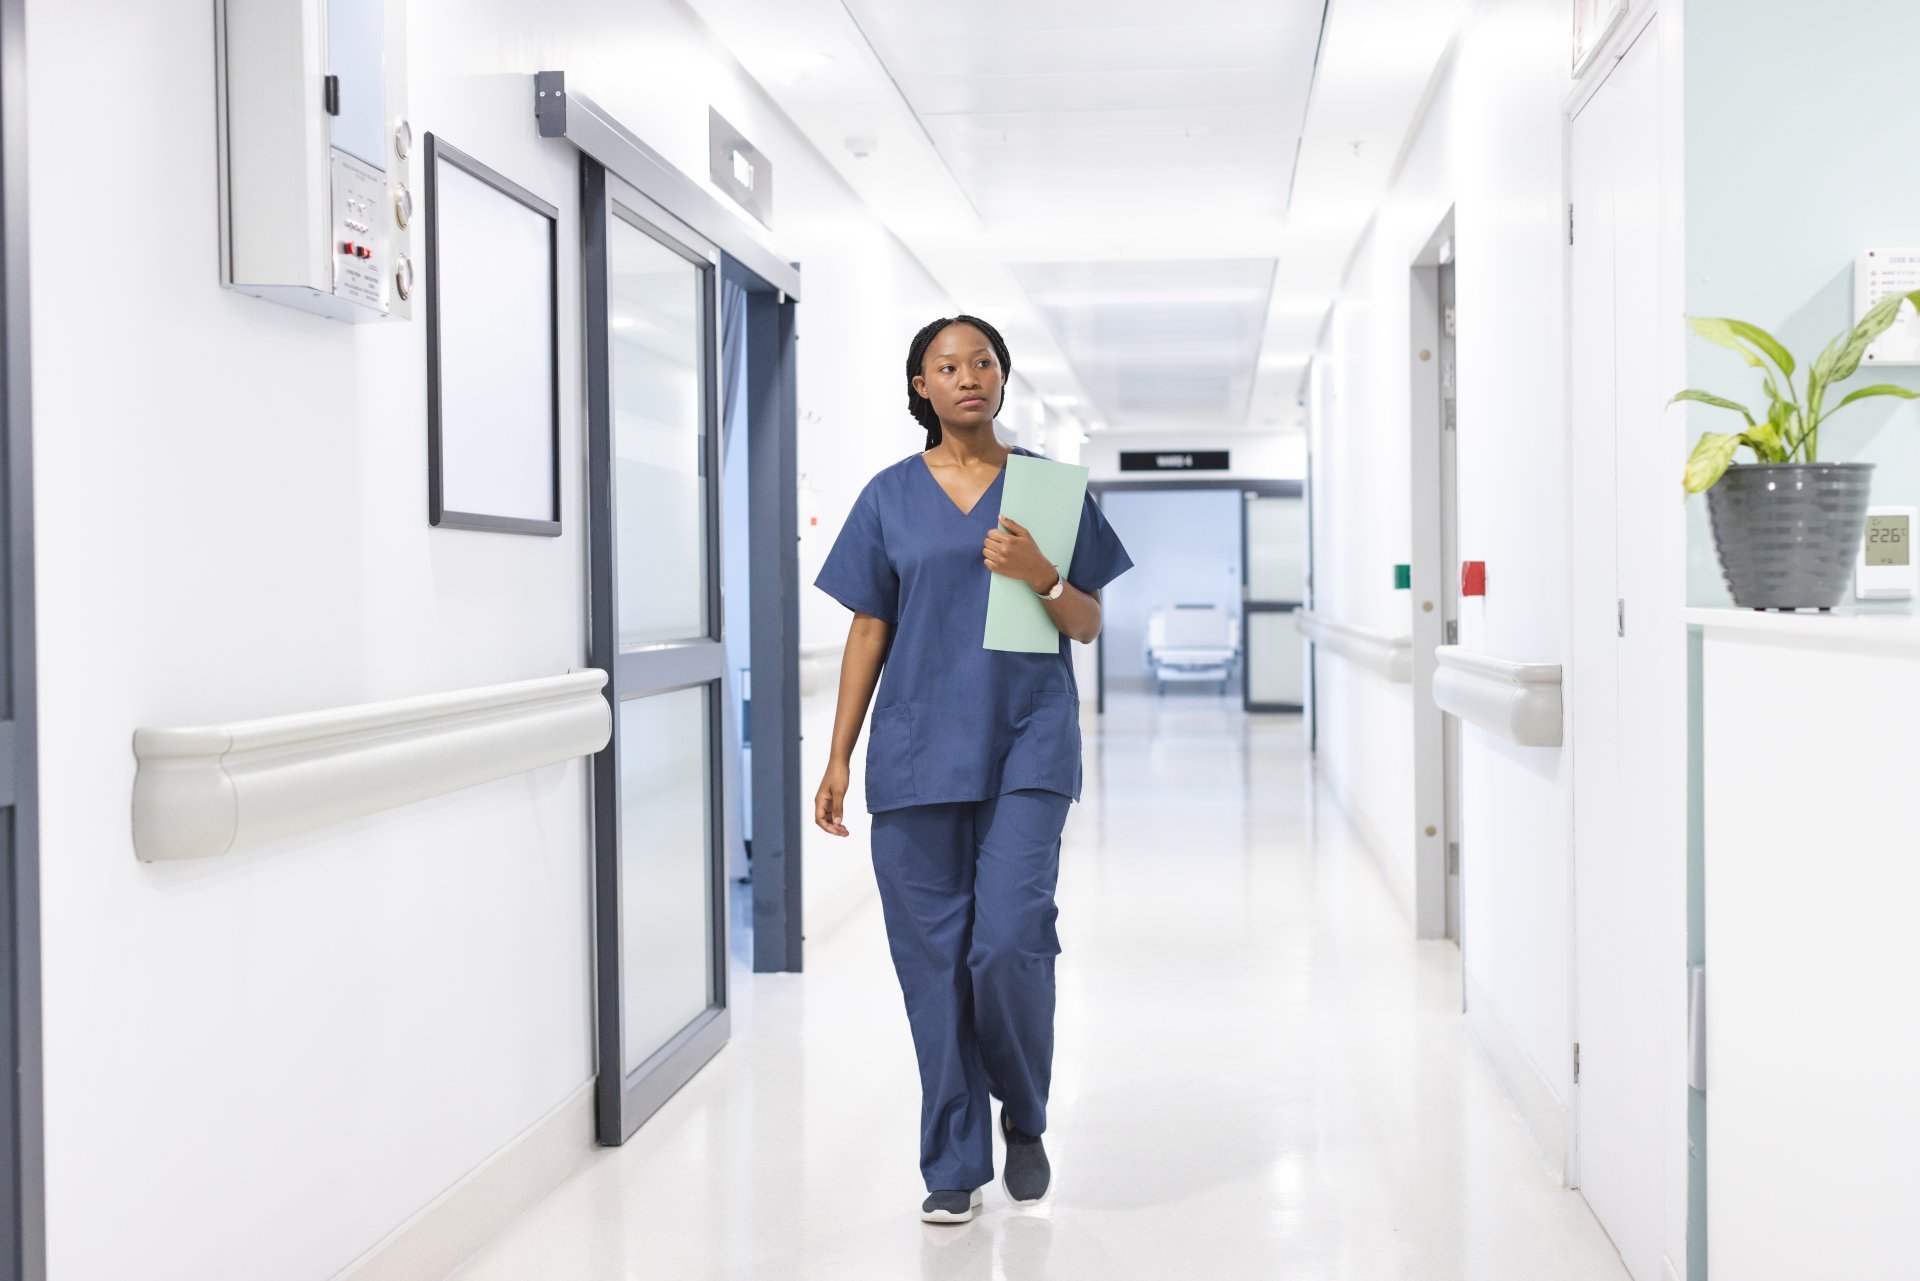 A young female nurse holding documents walks down a hospital corridor.